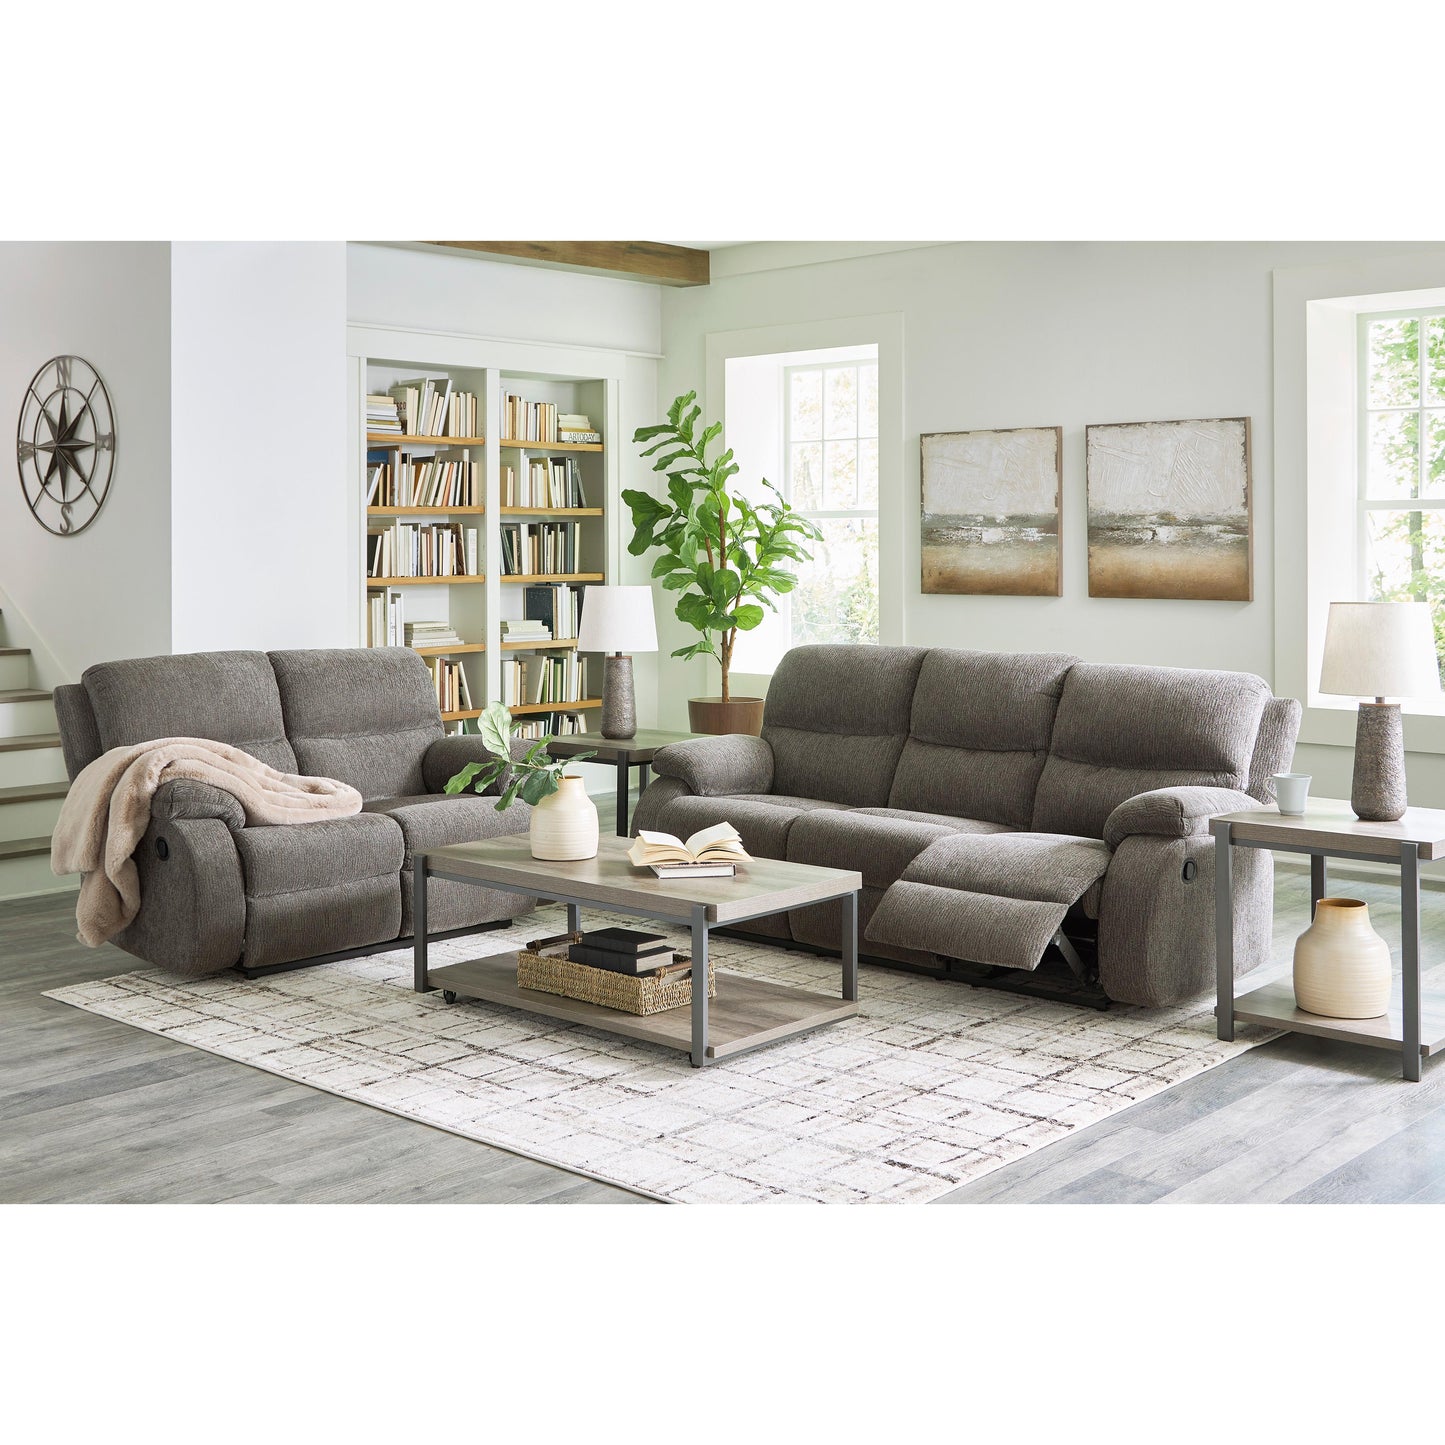 Signature Design by Ashley Scranto 66502 2 pc Reclining Living Room Set IMAGE 1